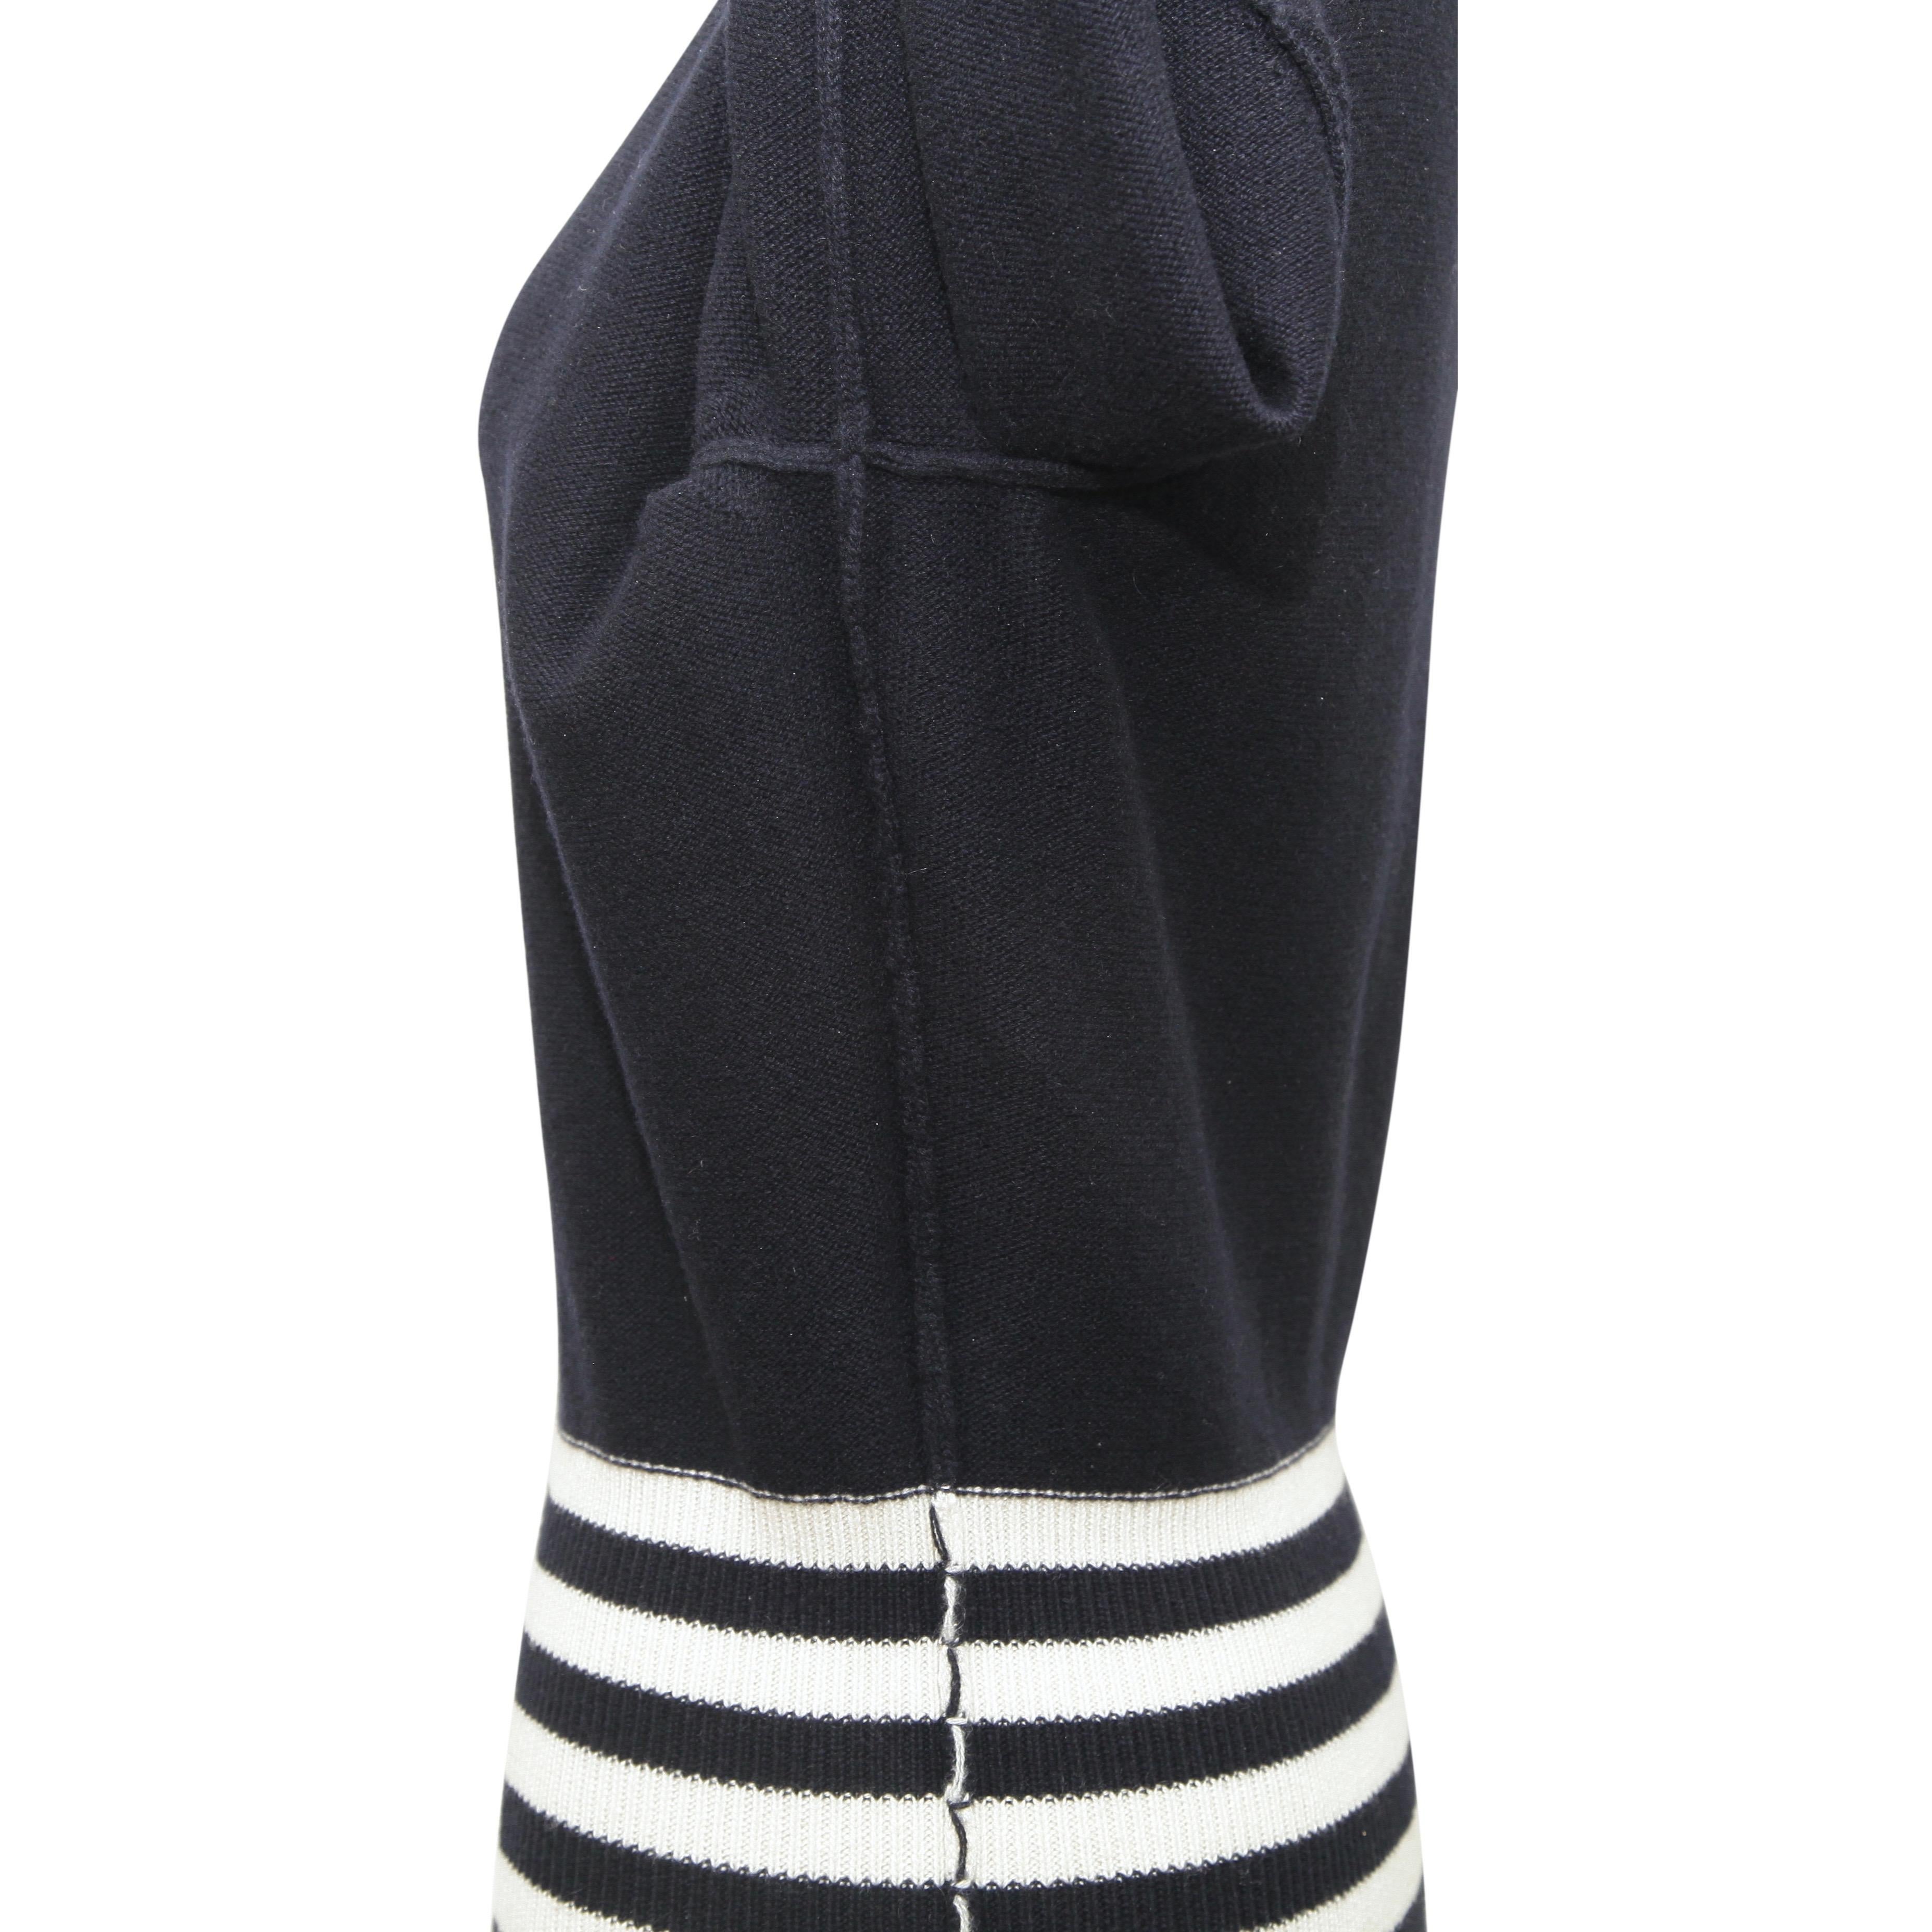 Women's CHANEL Sweater Dress Tunic Knit Navy Striped Long Sleeve Cashmere Sz 42 2016 16K